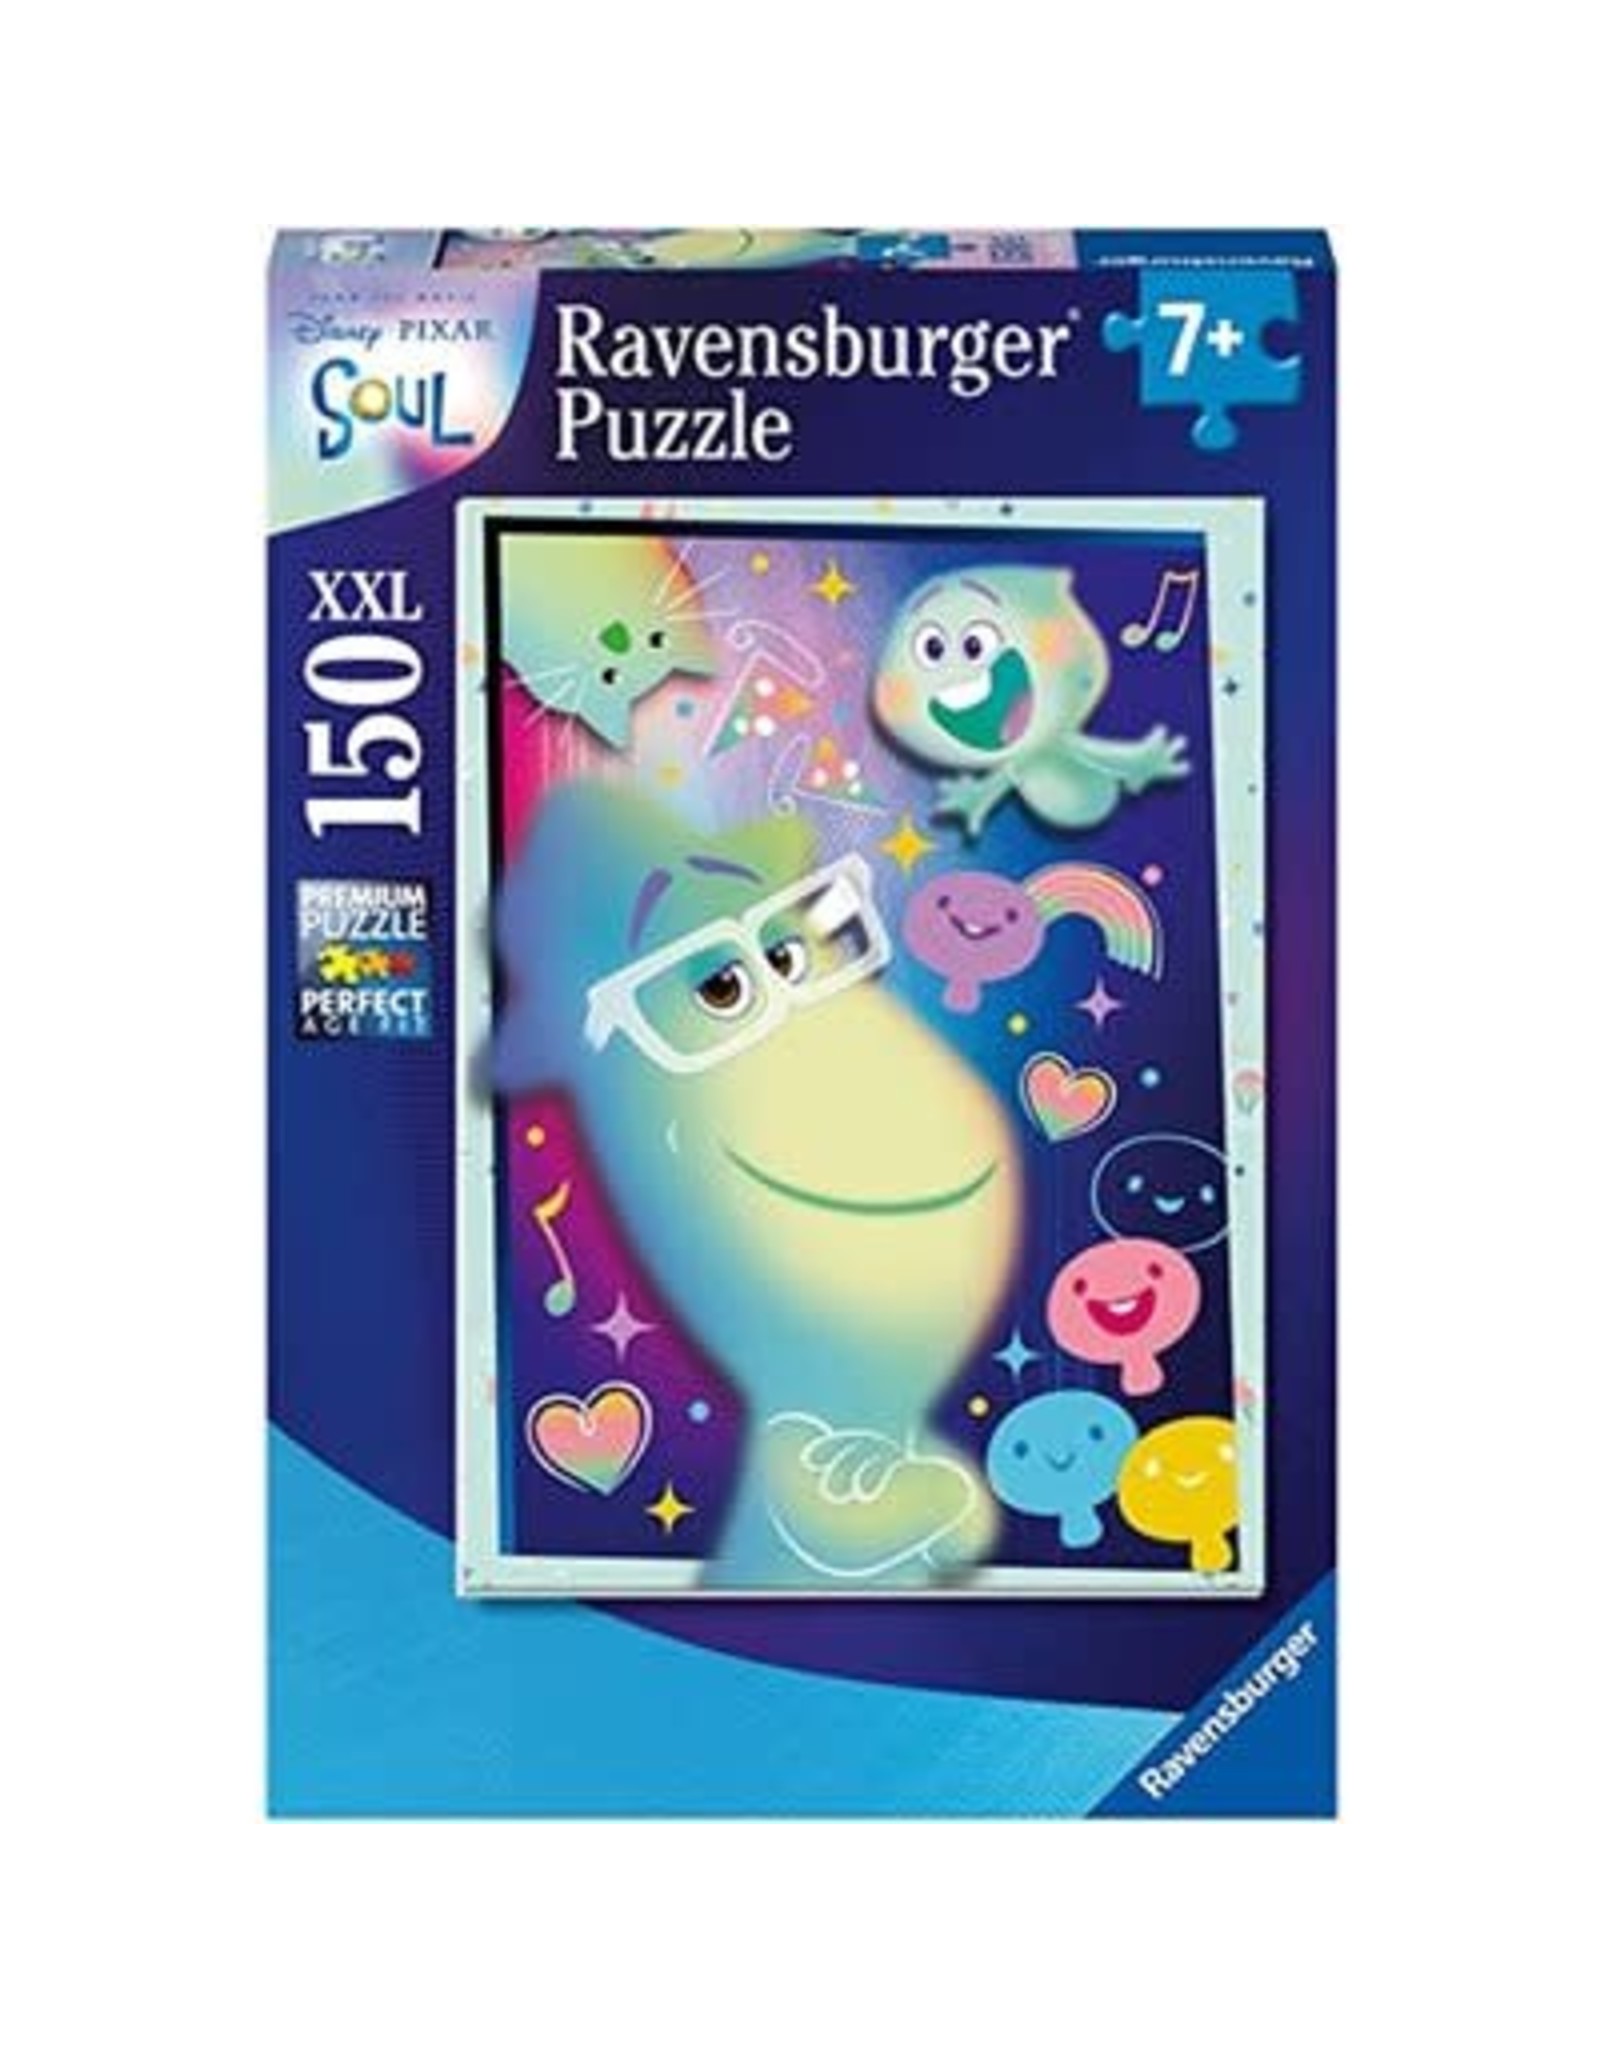 Ravensburger Puzzle Ravensburger 150 pcs licence: Soul Joe and 22